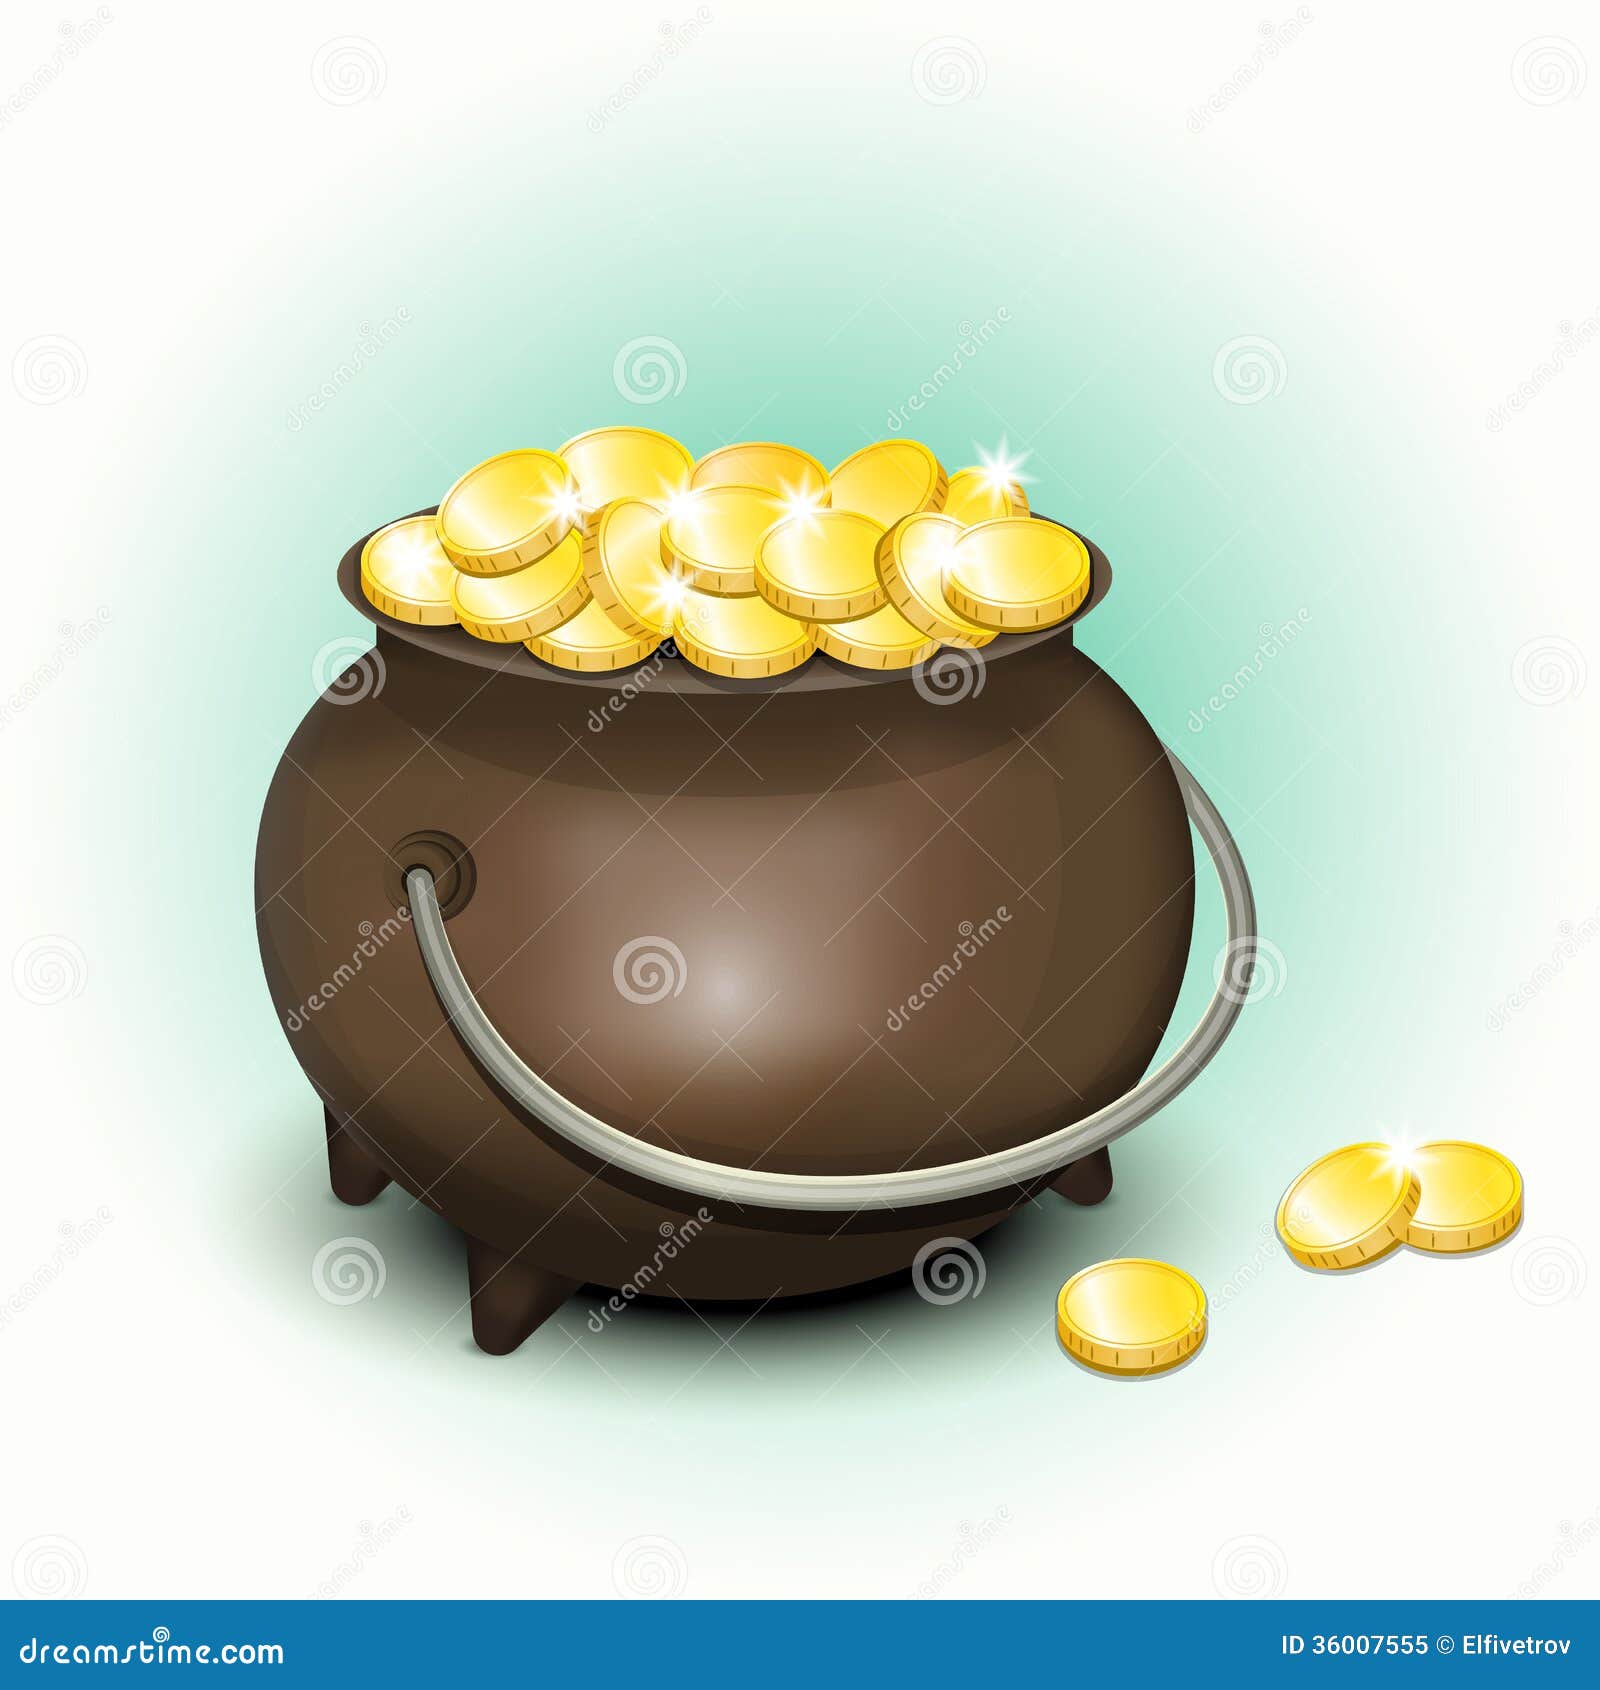 https://thumbs.dreamstime.com/z/magic-pot-gold-coins-patricks-day-illustration-36007555.jpg